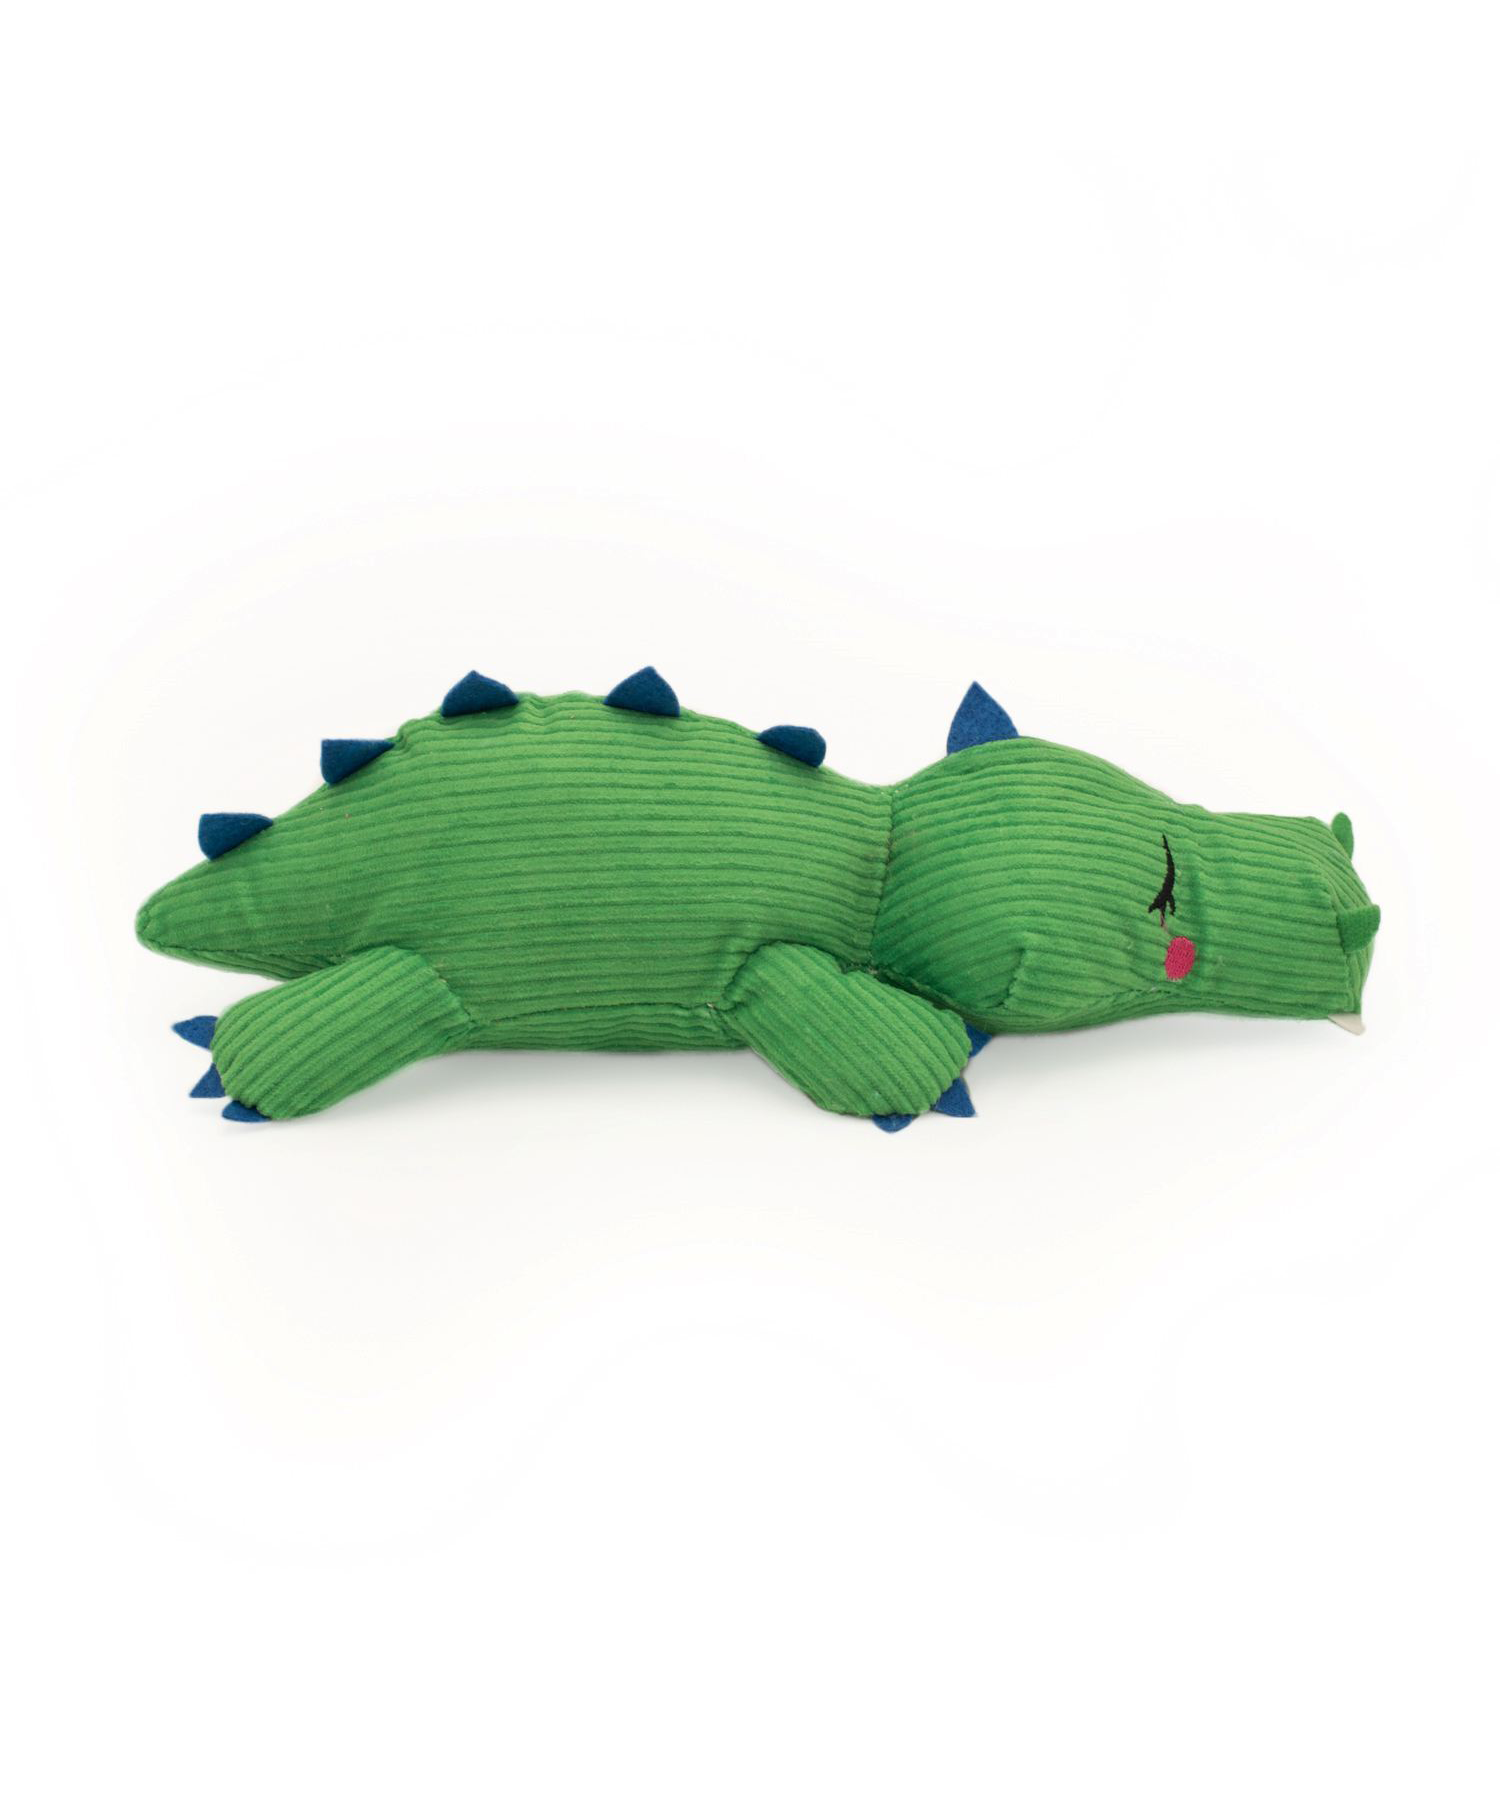 Zippy Paws Snooziez - Alligator Silent Squeaker Plush Dog Toy